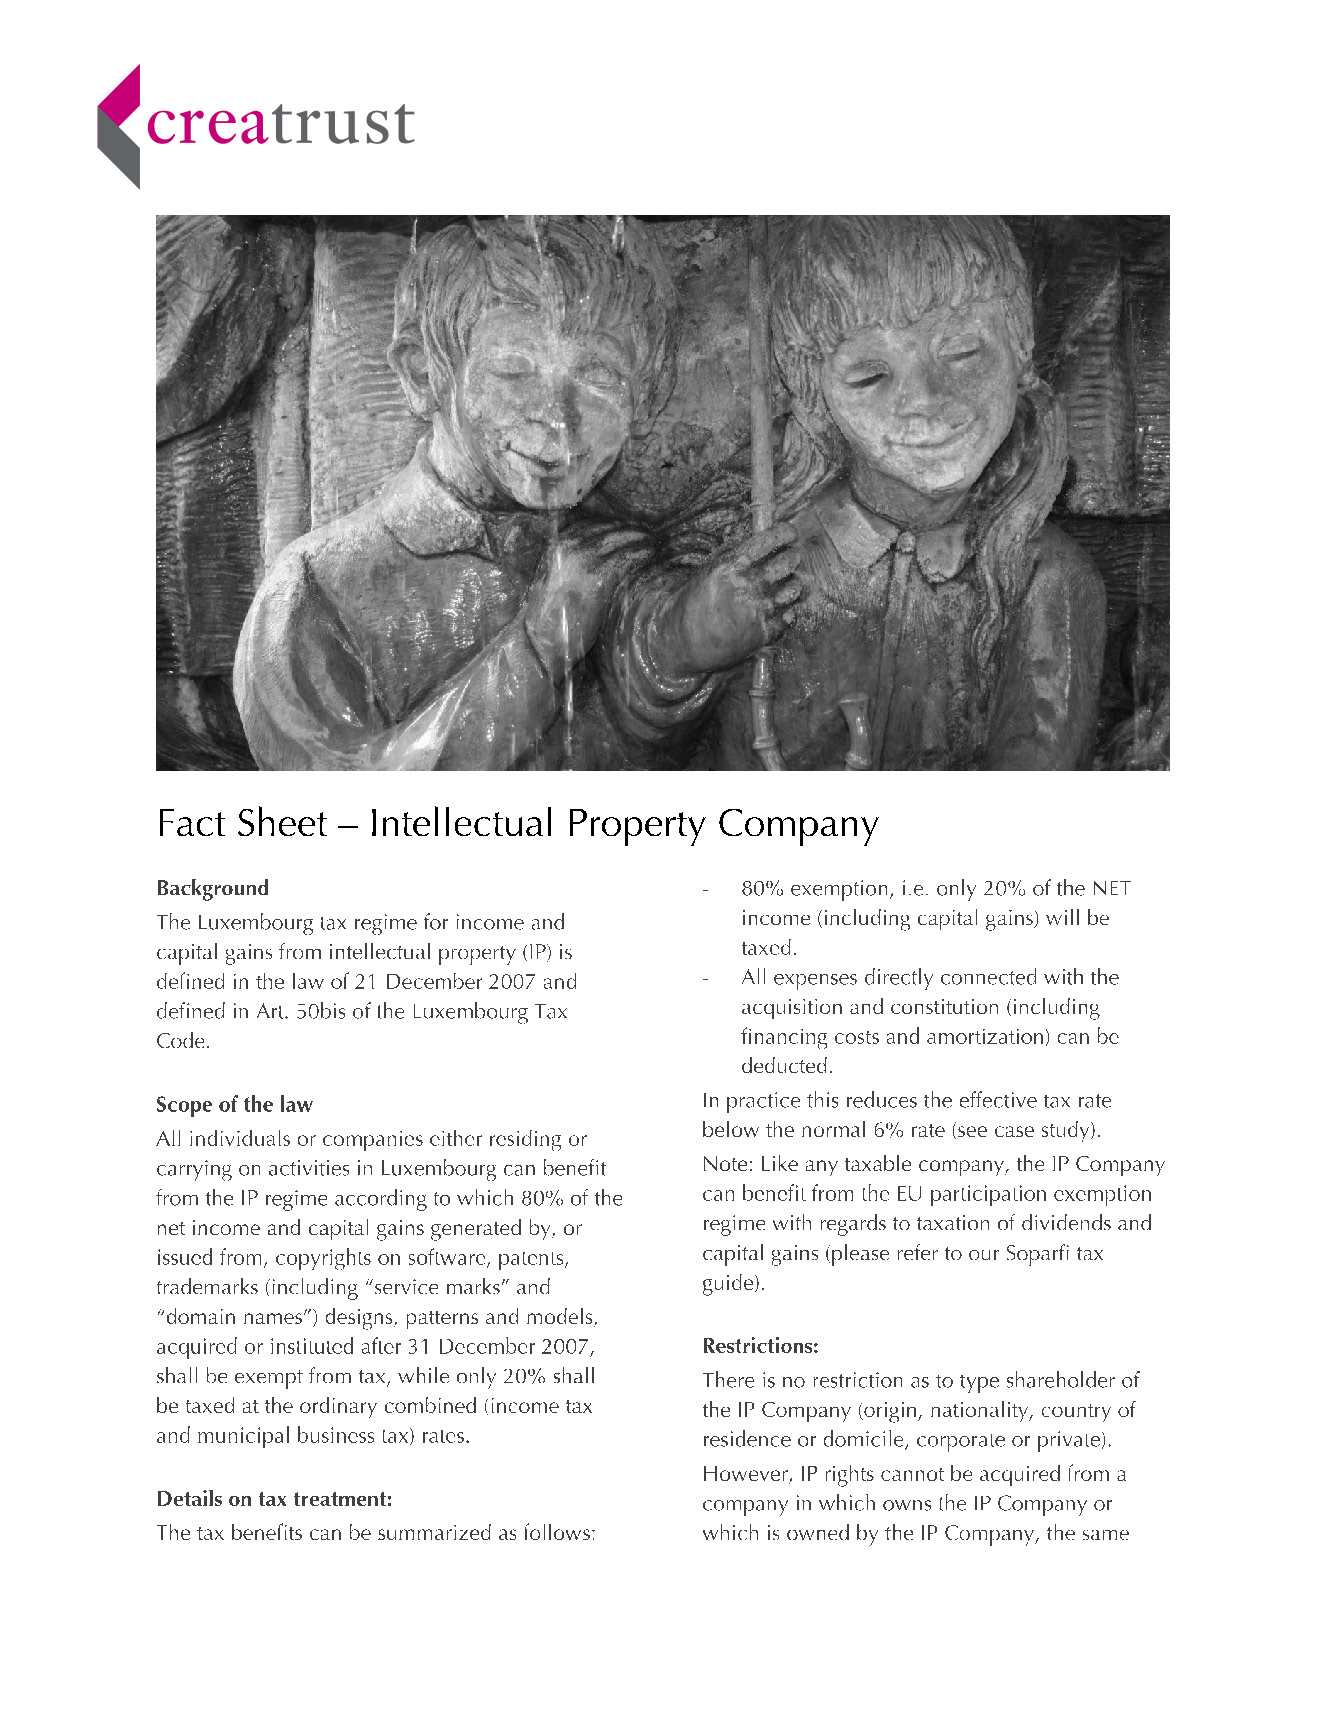 Creatrust Factsheet | Intellectual Property